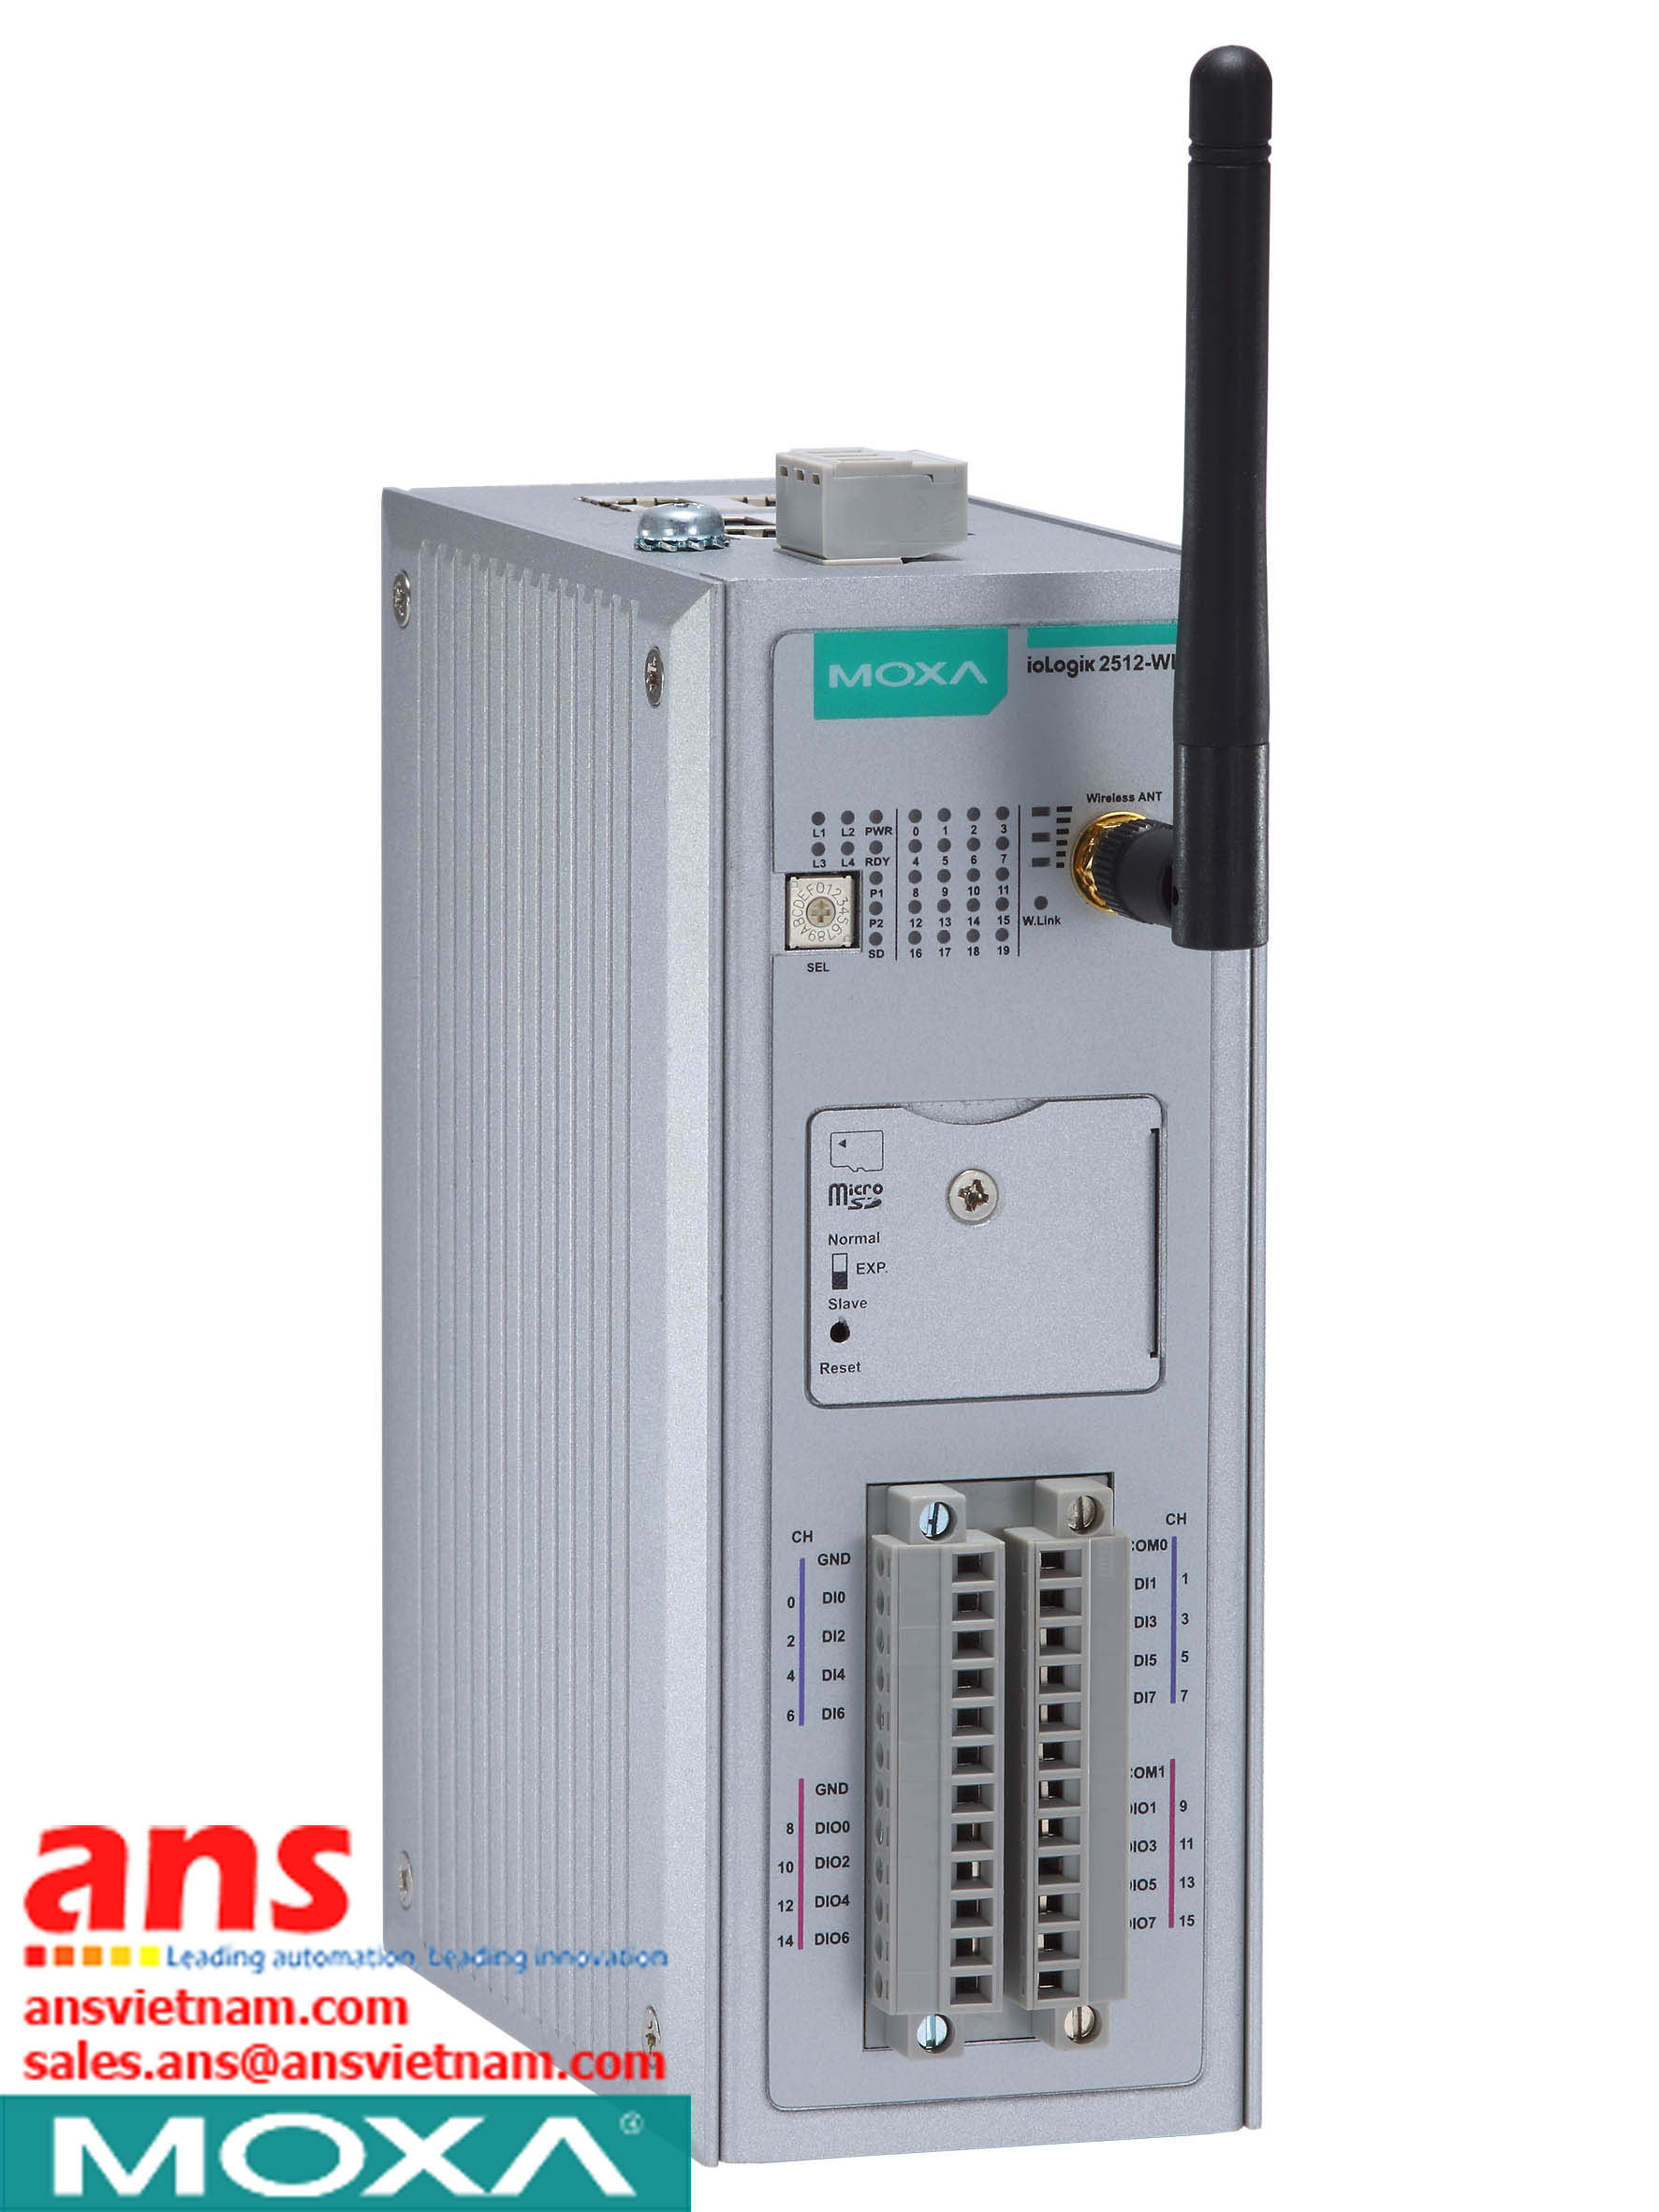 Smart-Wireless-I-O-ioLogik-2512-WL1-Moxa-vietnam.jpg